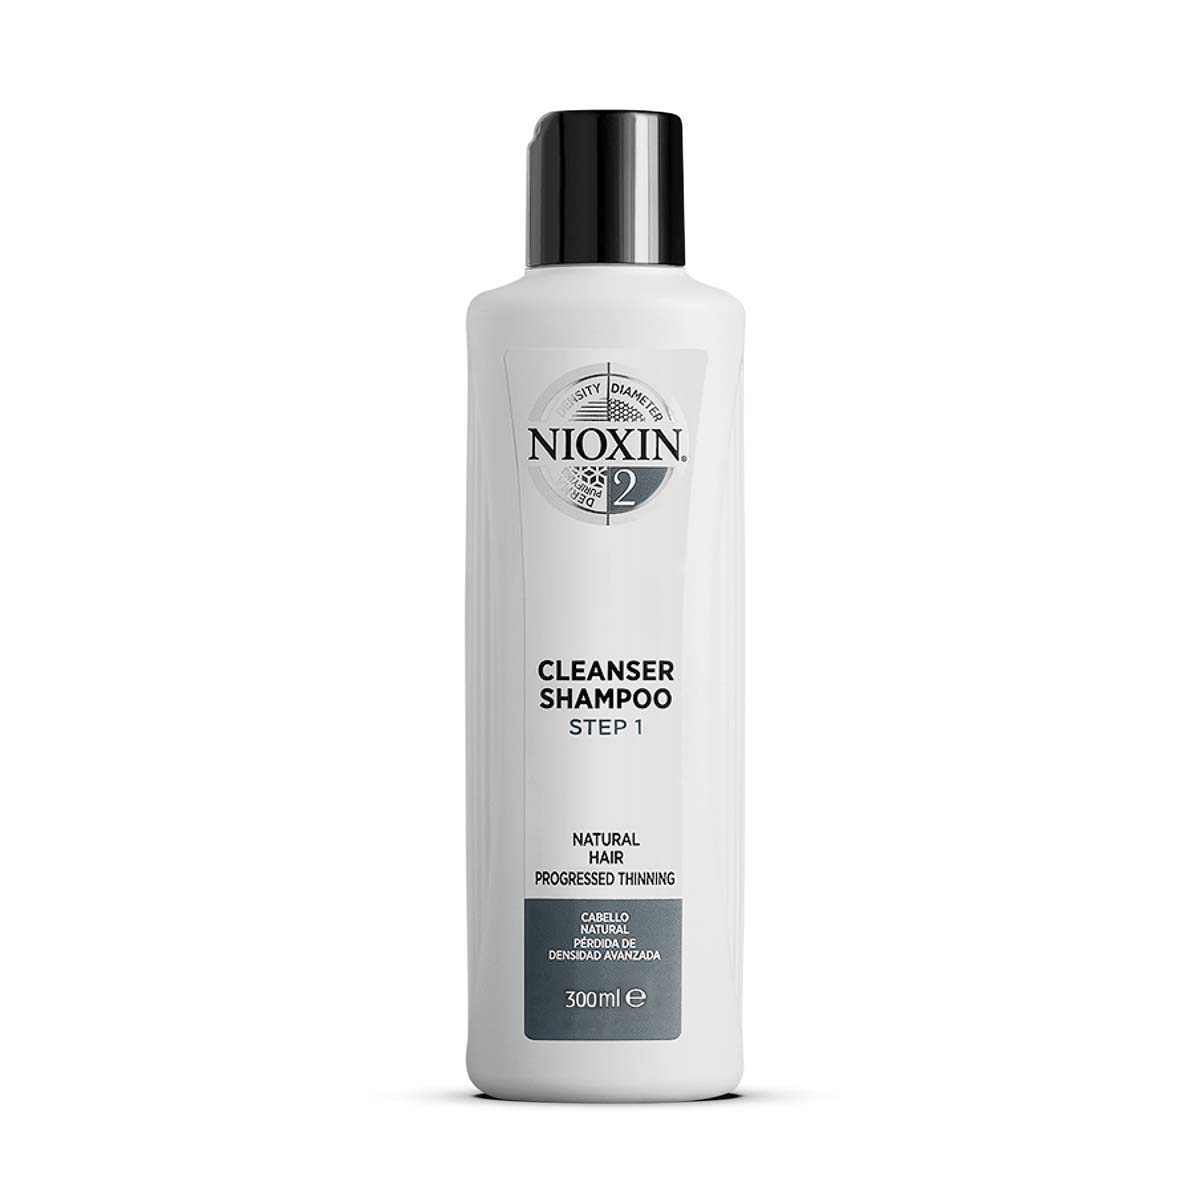 Nioxin 3-Part System 2 Cleanser Shampoo 300Ml